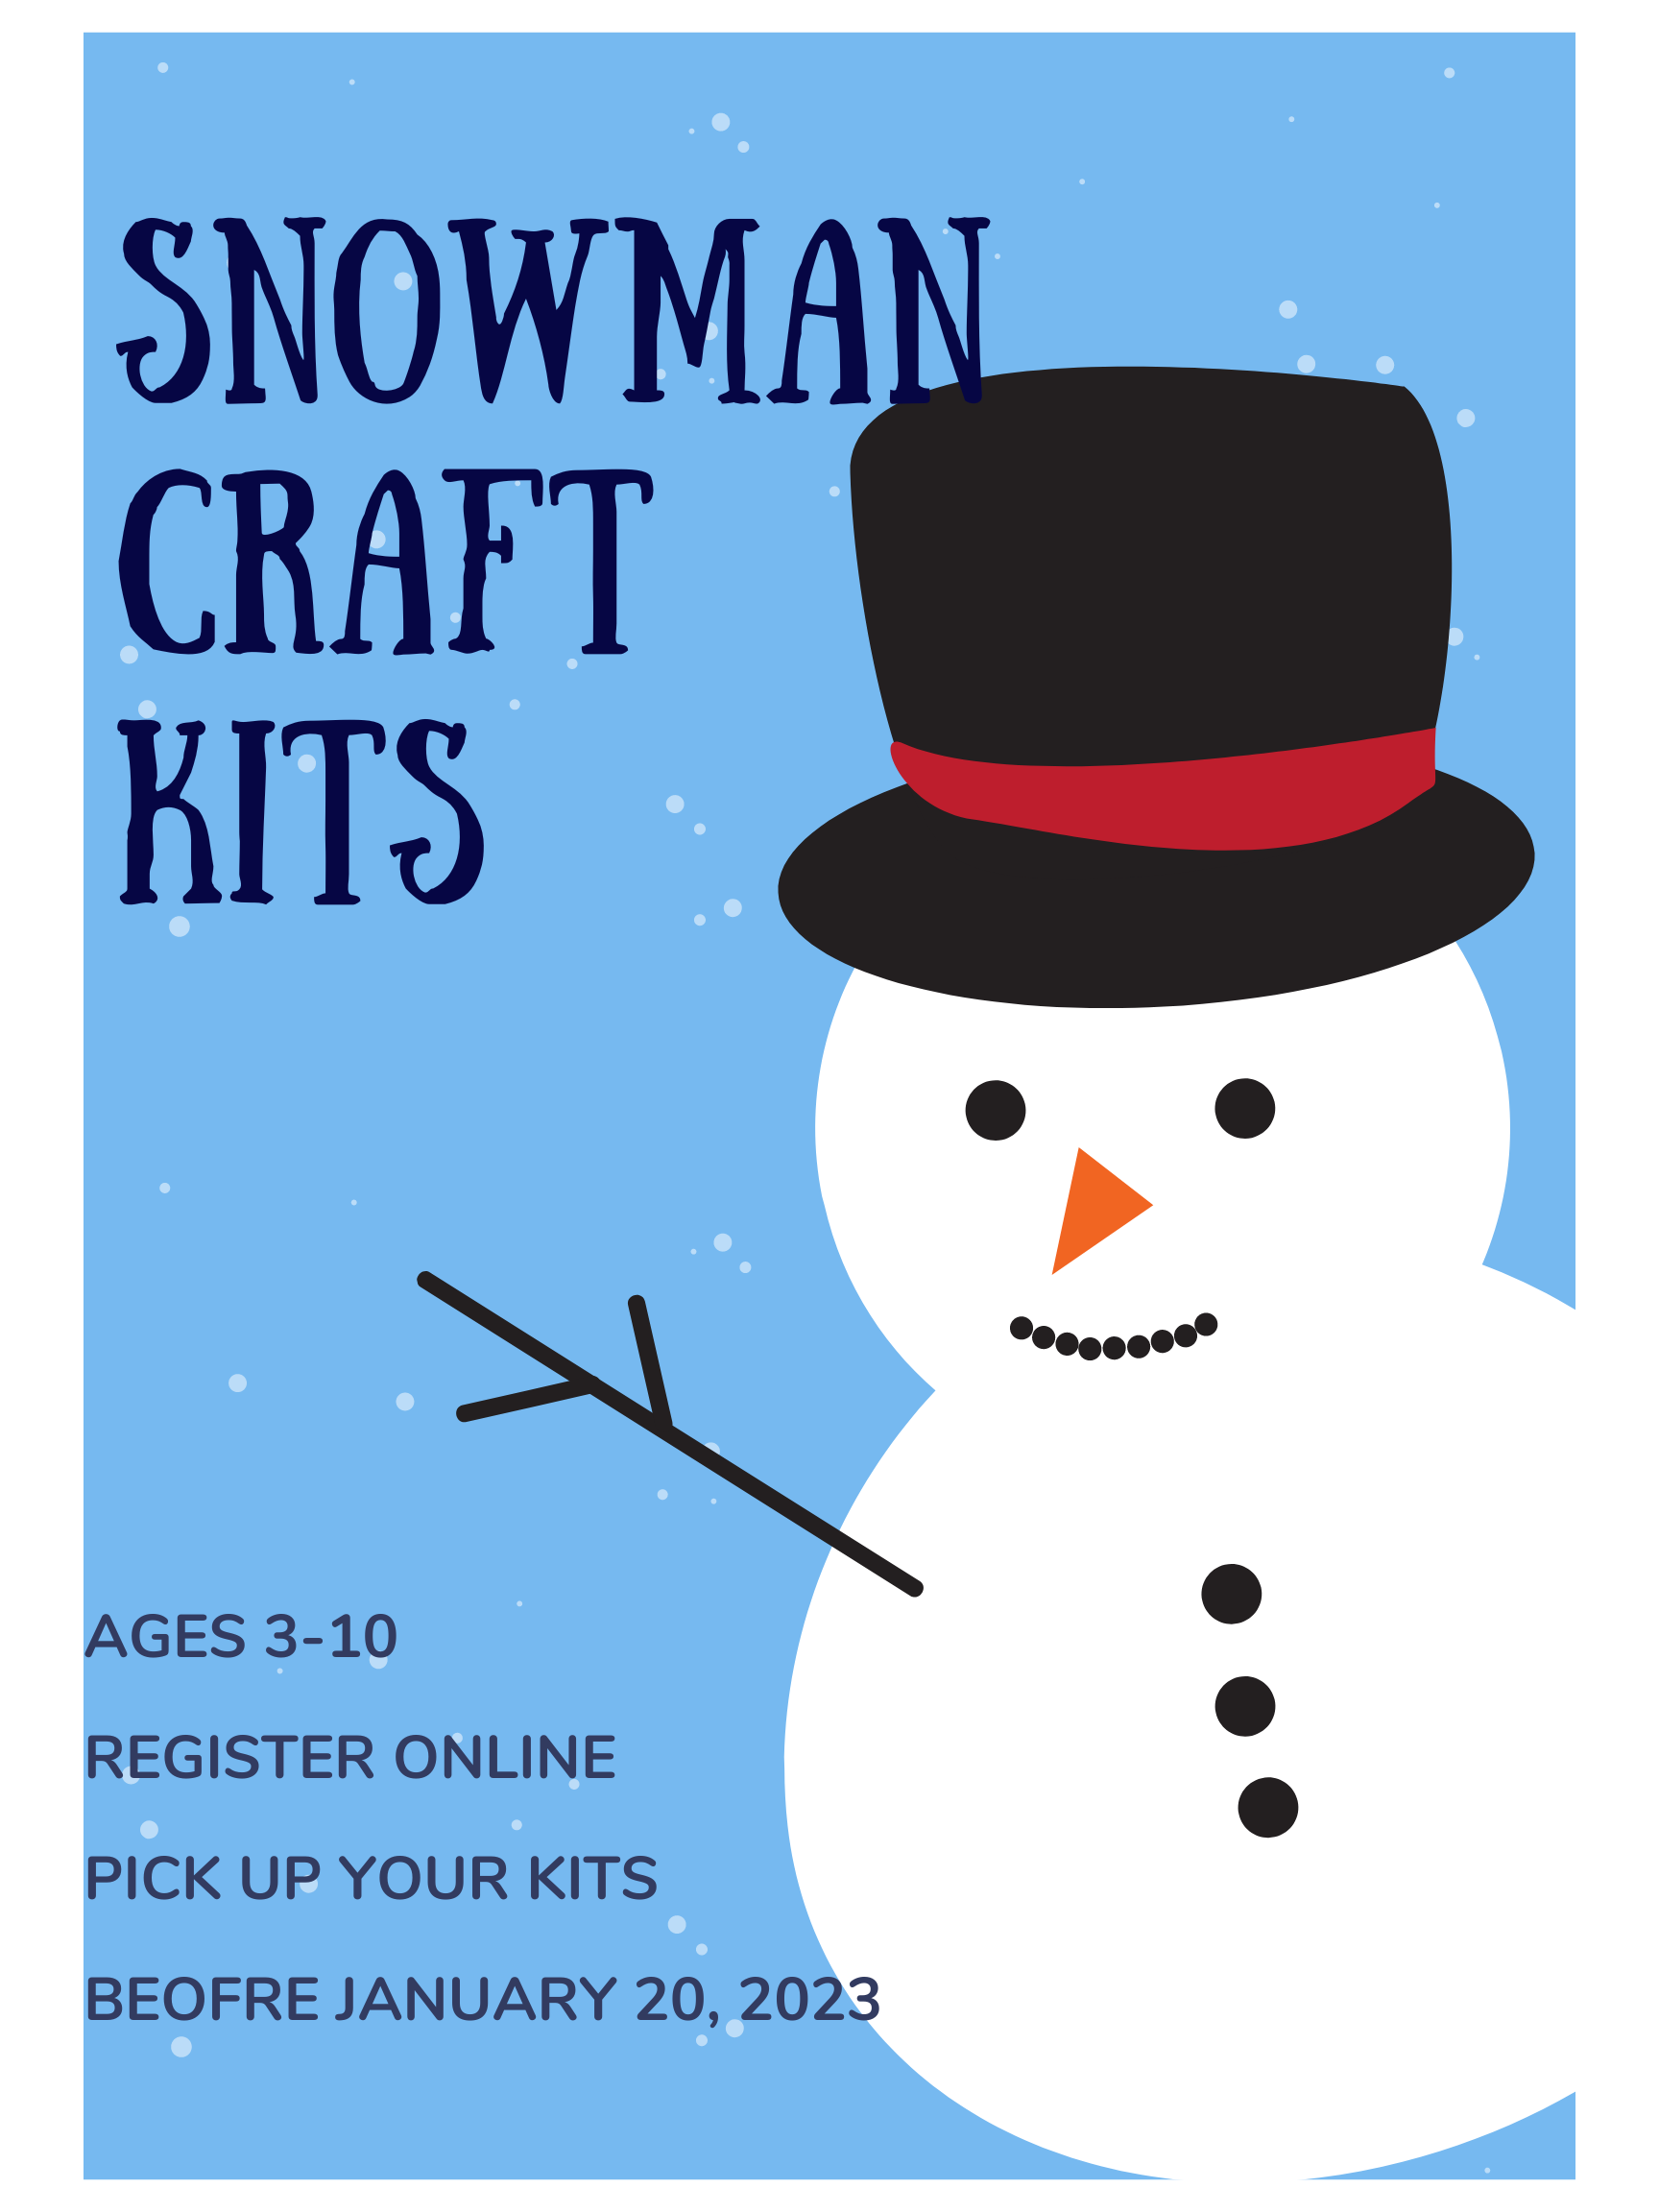 snowman craft kit poster